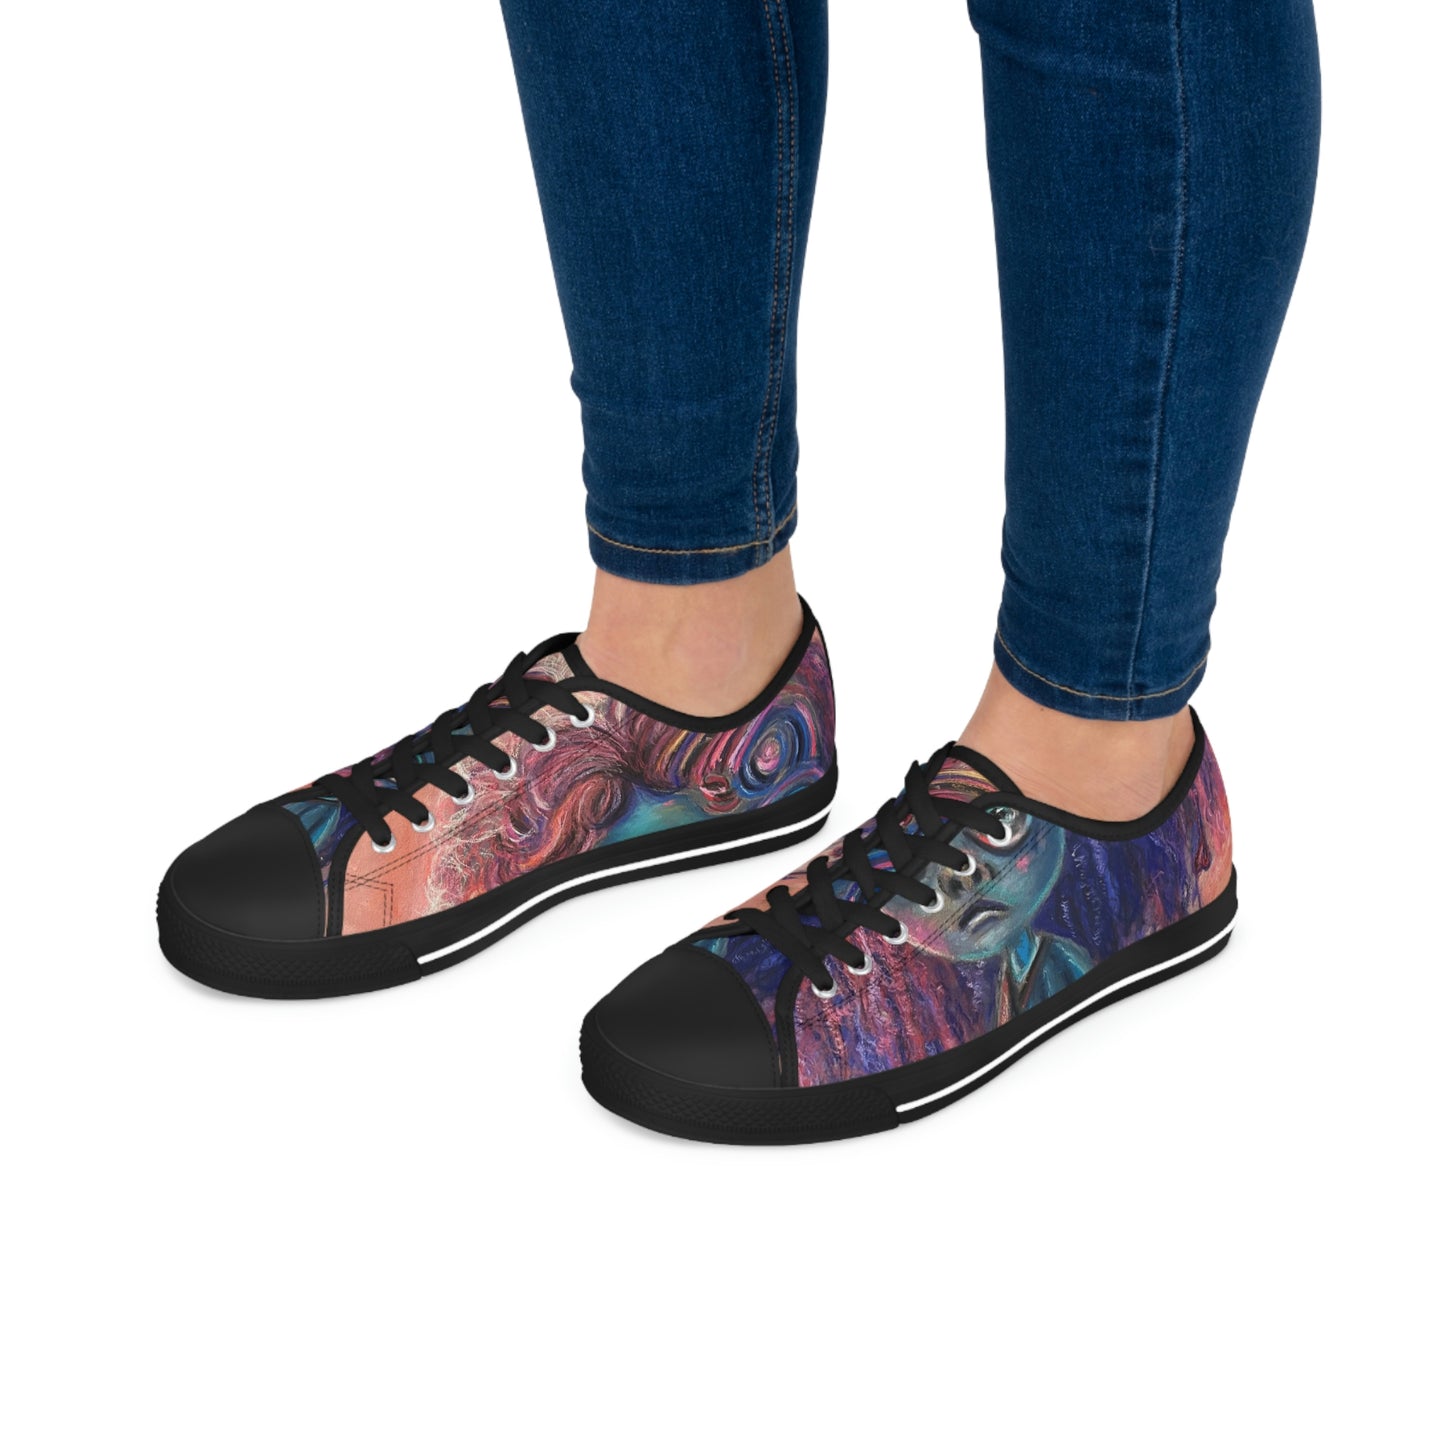 Colorful Surreal Art Women's Low Top Sneakers